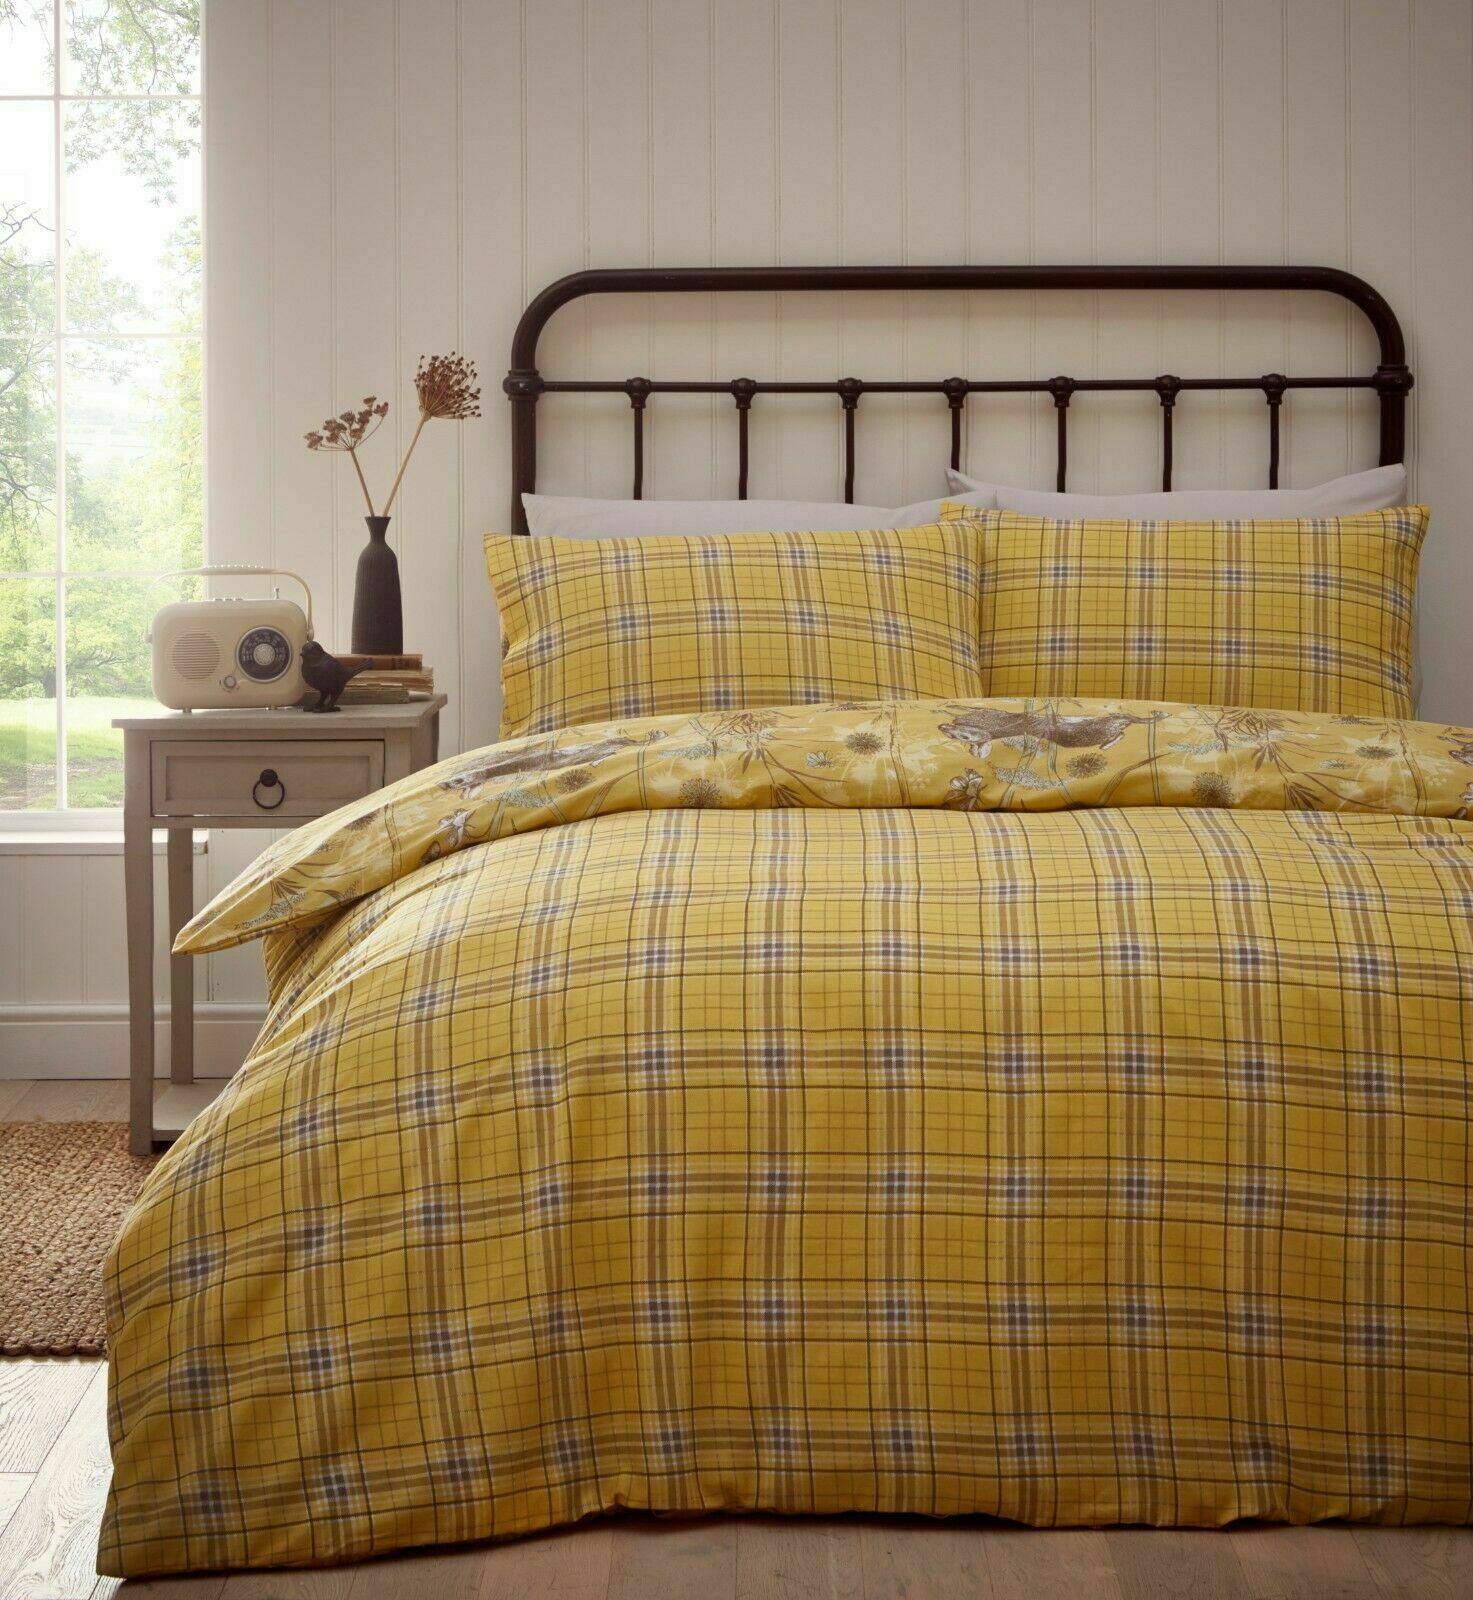 Ochre Mustard Rabbit Meadow Duvet Cover Reversible Bedding Set - Home Inspired Gifts